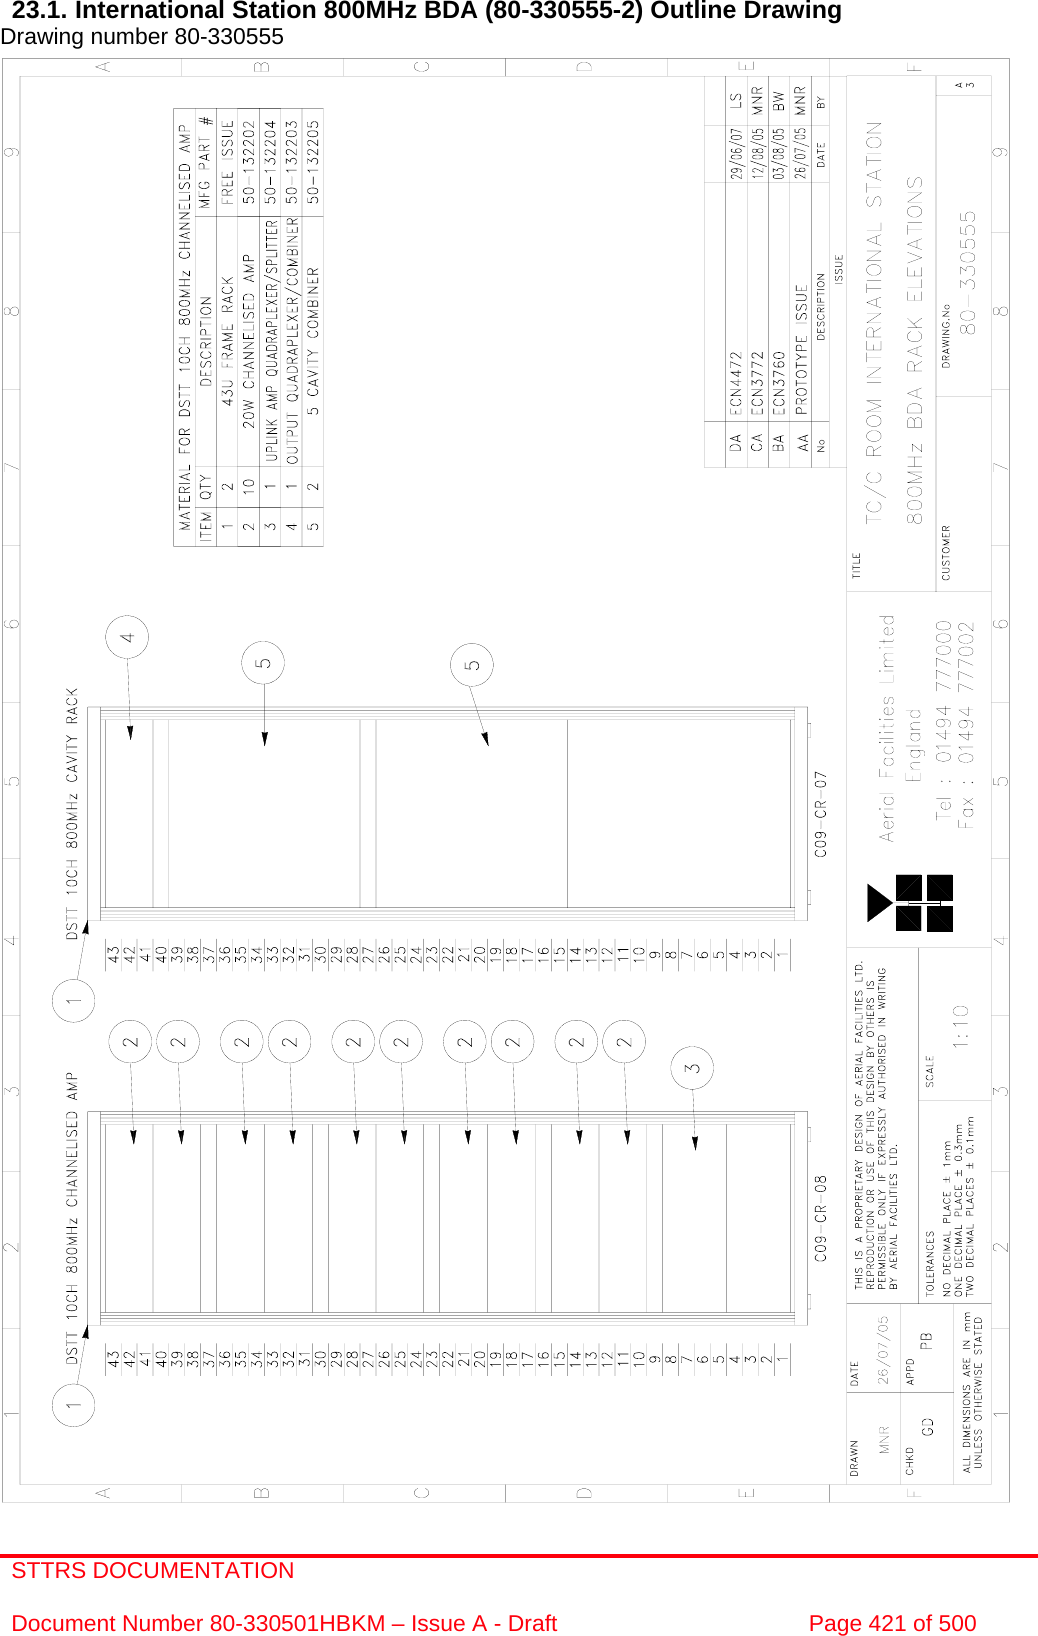 STTRS DOCUMENTATION  Document Number 80-330501HBKM – Issue A - Draft  Page 421 of 500   23.1. International Station 800MHz BDA (80-330555-2) Outline Drawing  Drawing number 80-330555                                                     